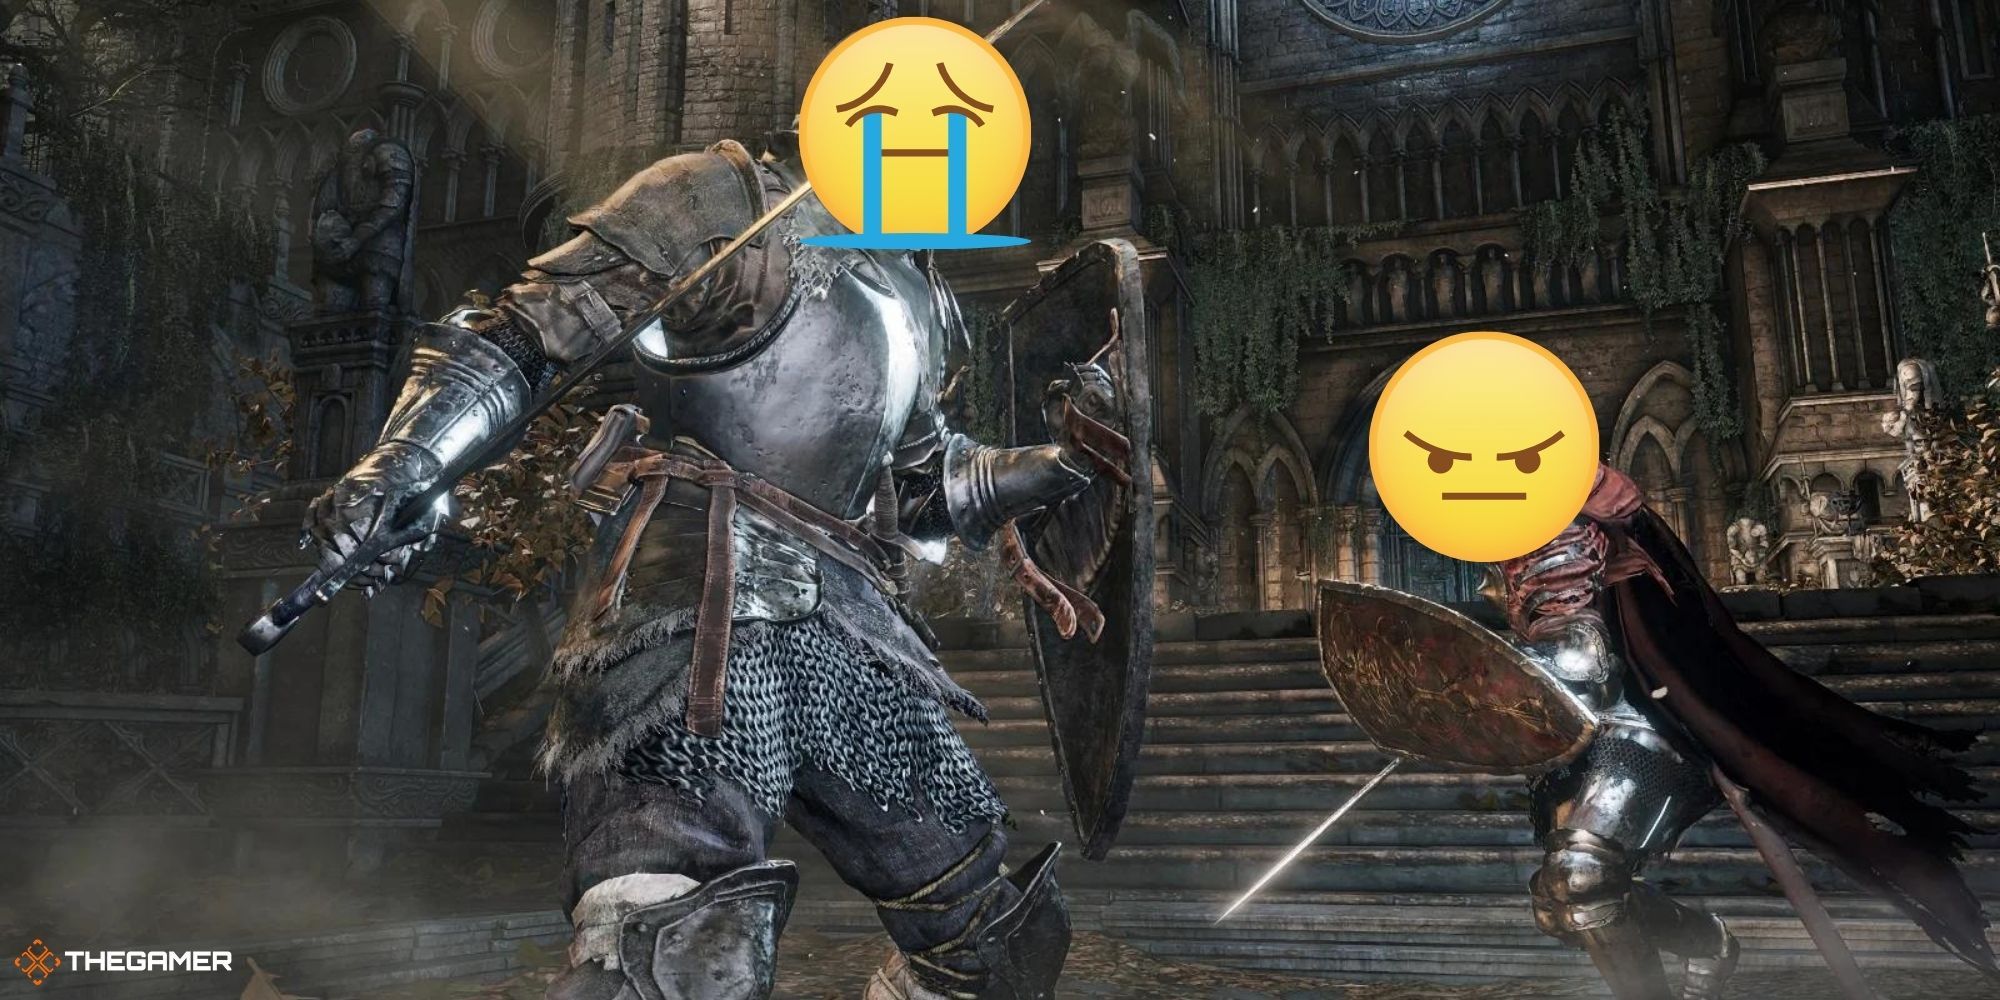 Dark Souls - screenshot with emojis overtop